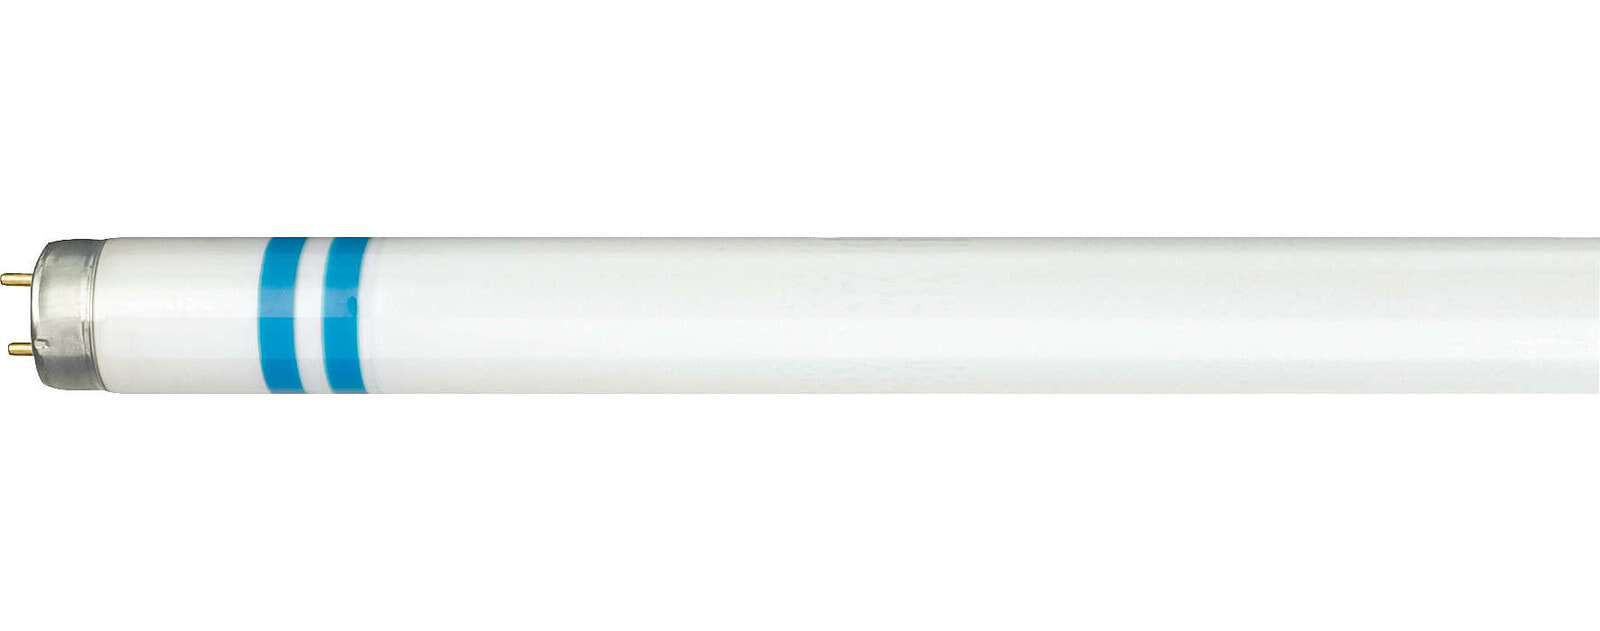 Philips MASTER TL-D Secura люминисцентная лампа 36 W G13 Холодный белый A 64014740